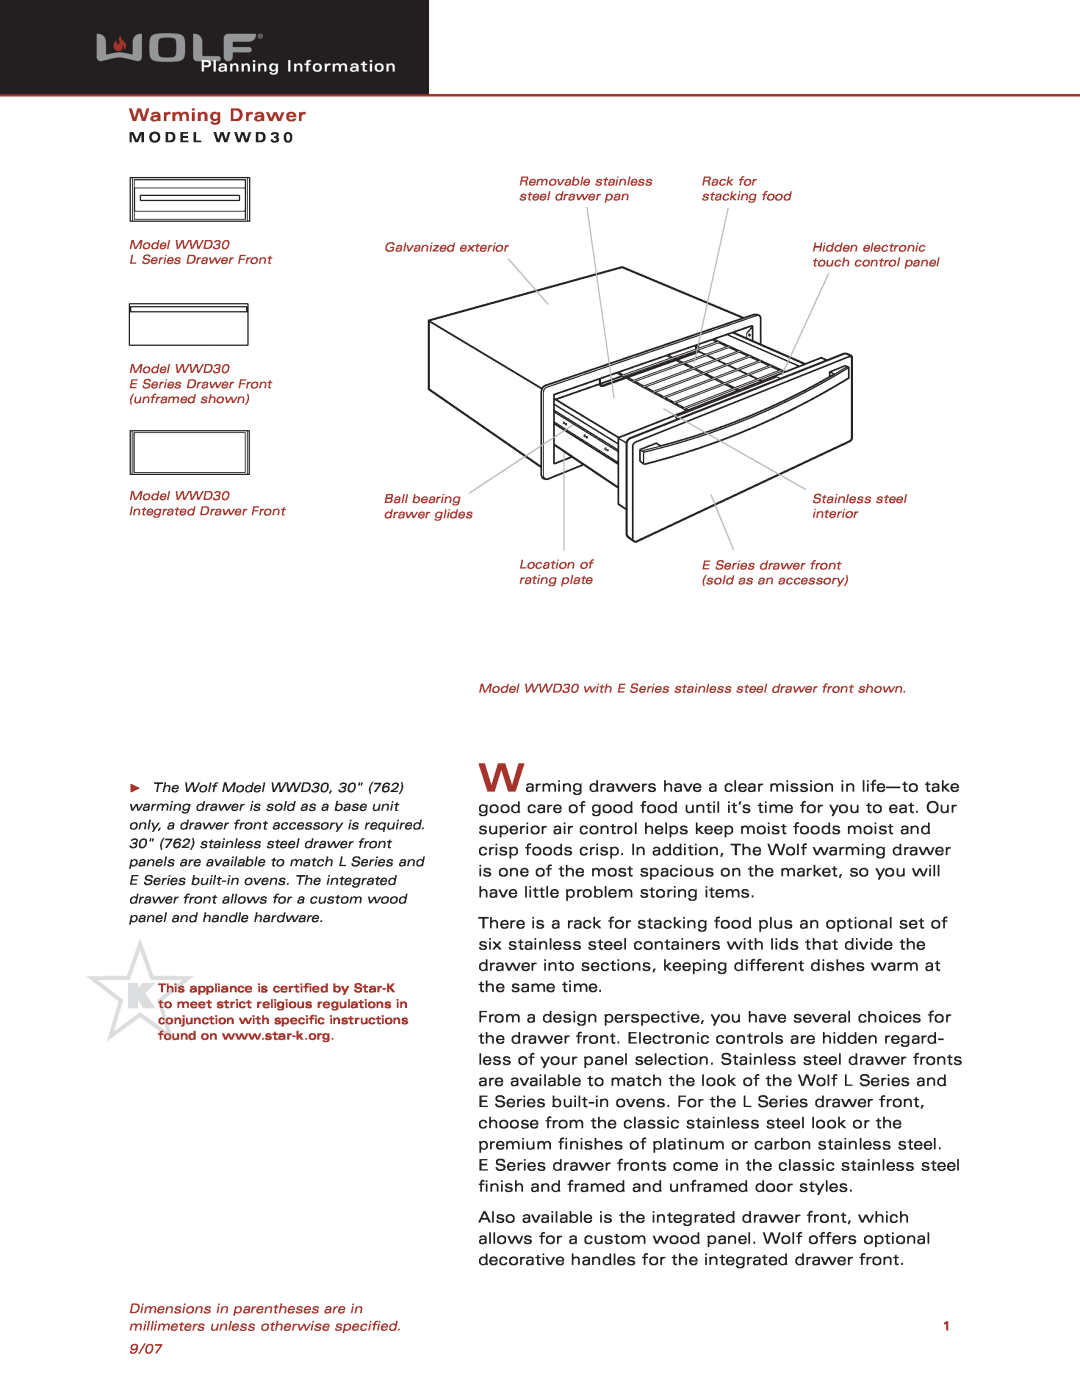 Wolf Appliance Company WWD30 dimensions Warming Drawer, Planning Information 